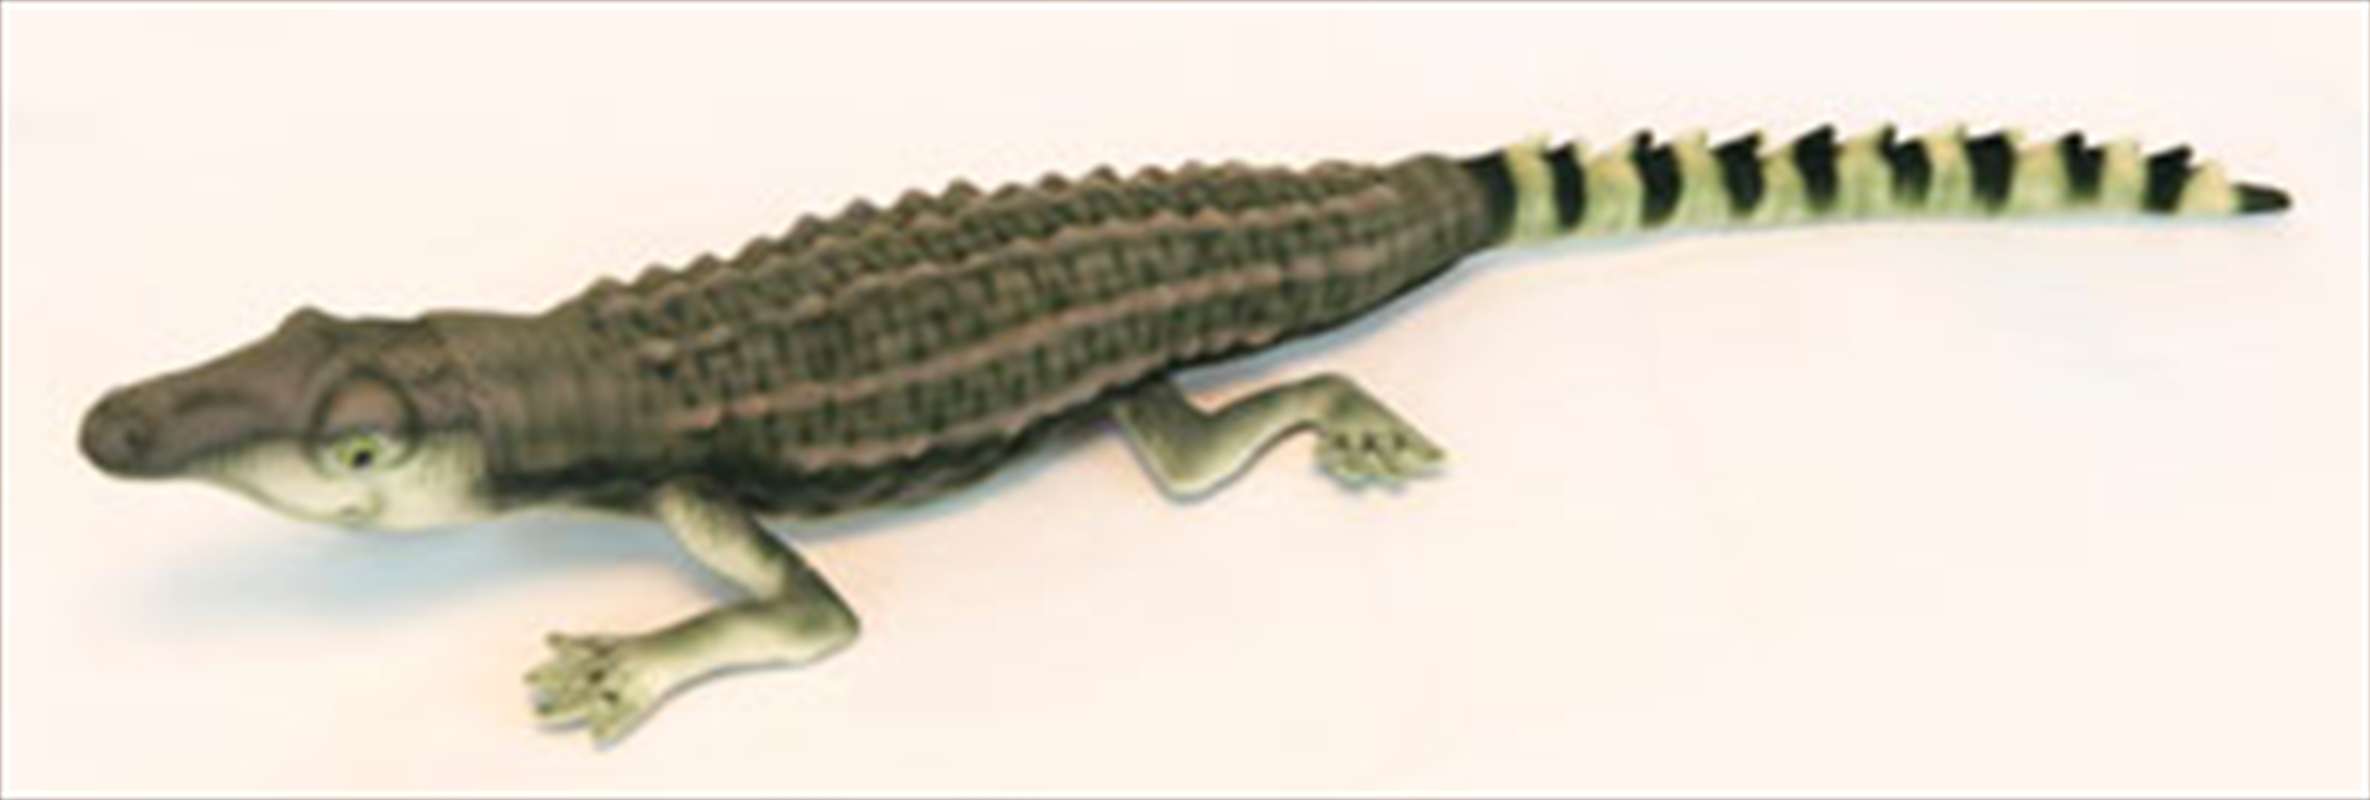 Philippine Crocodile 63cm/Product Detail/Plush Toys